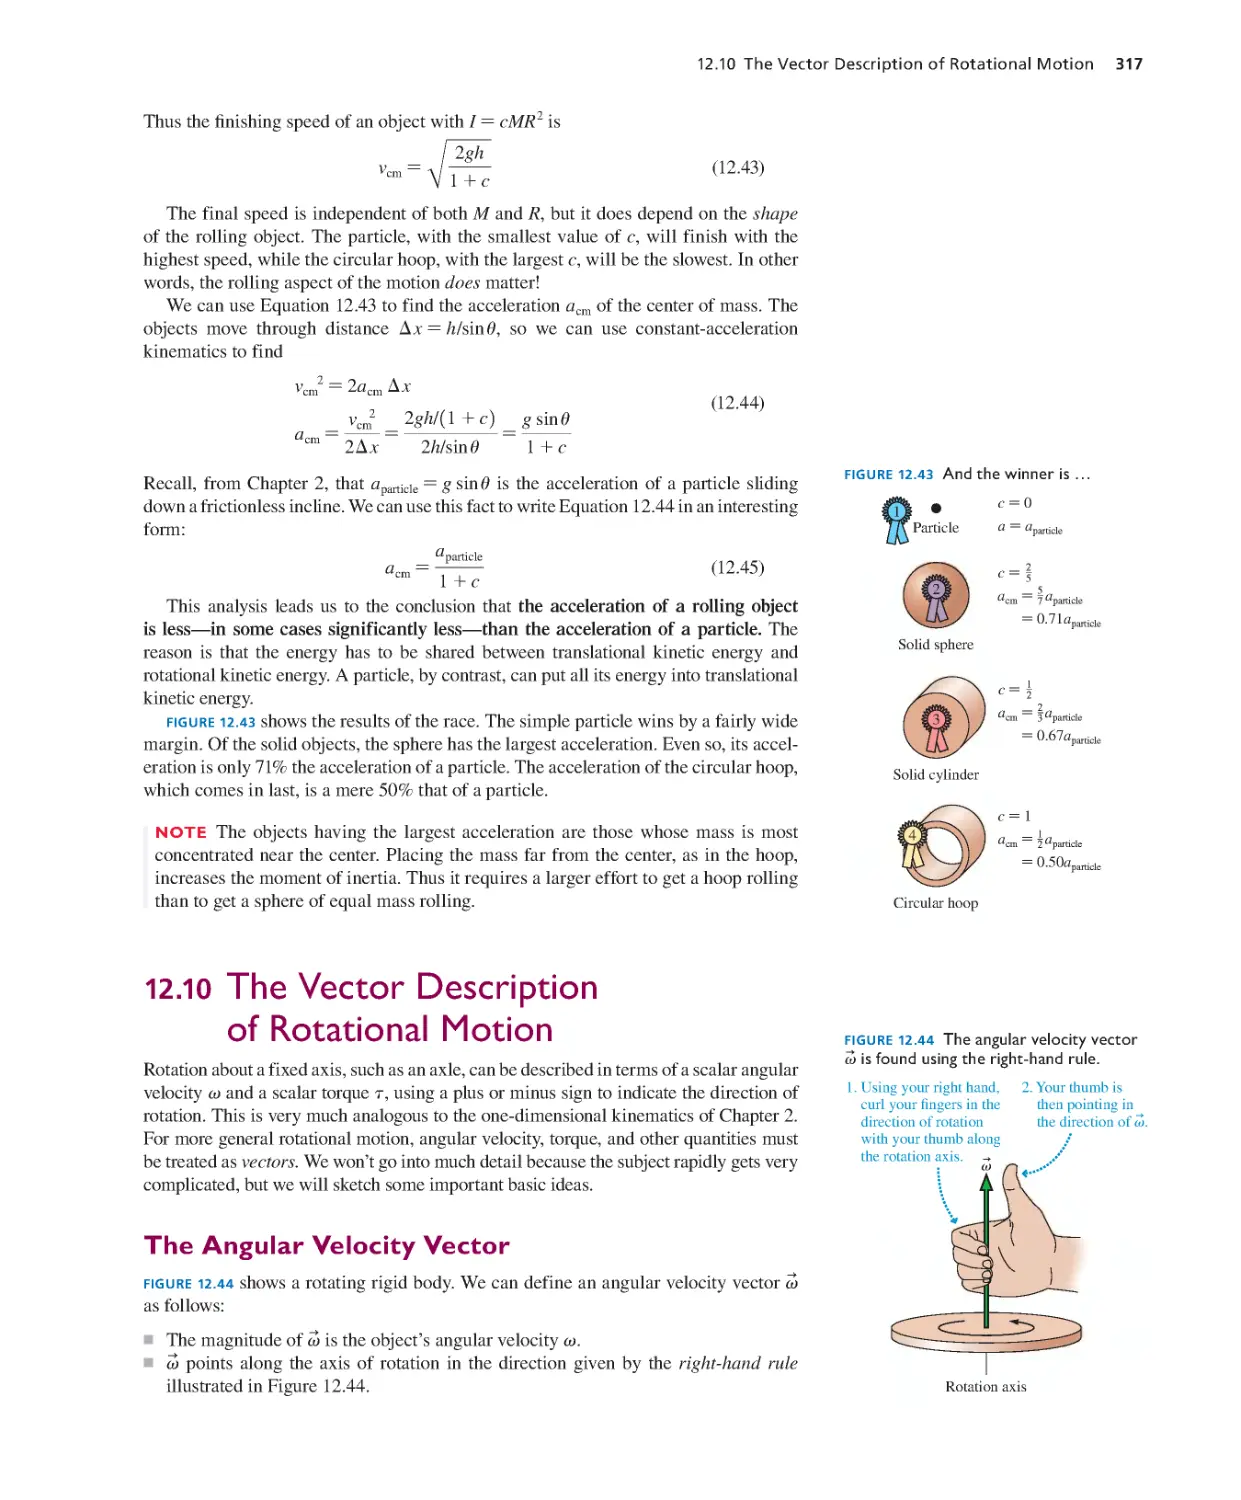 12.10. The Vector Description of Rotational Motion